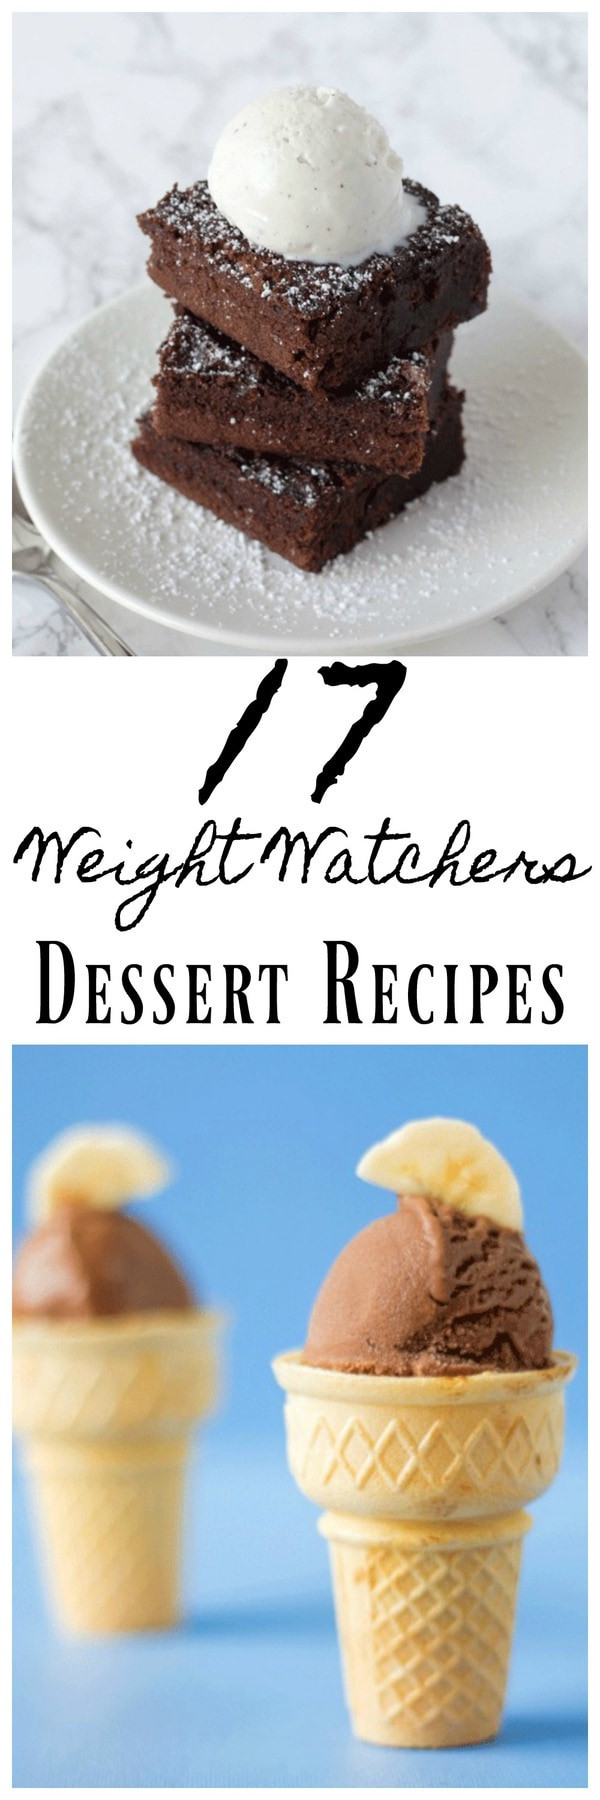 Weight Watchers Desserts Recipes
 17 Weight Watchers Dessert Recipes • Mid Momma